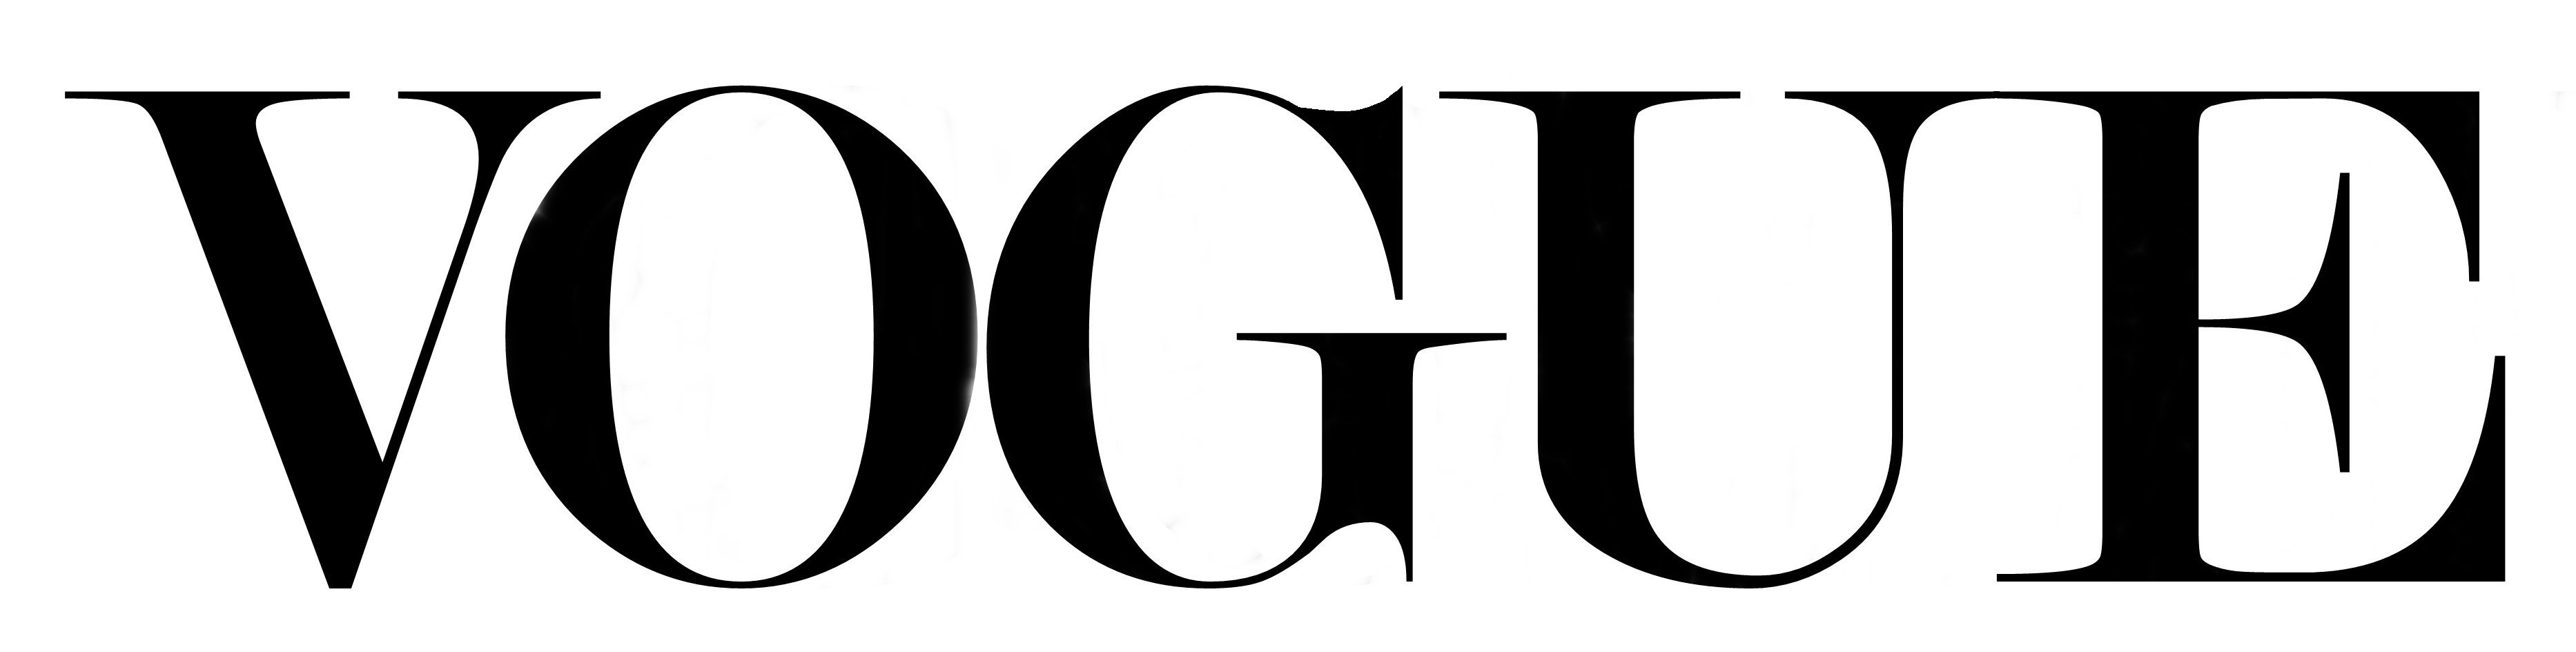 vogue-logo-wallpaperjpg-logo.jpg